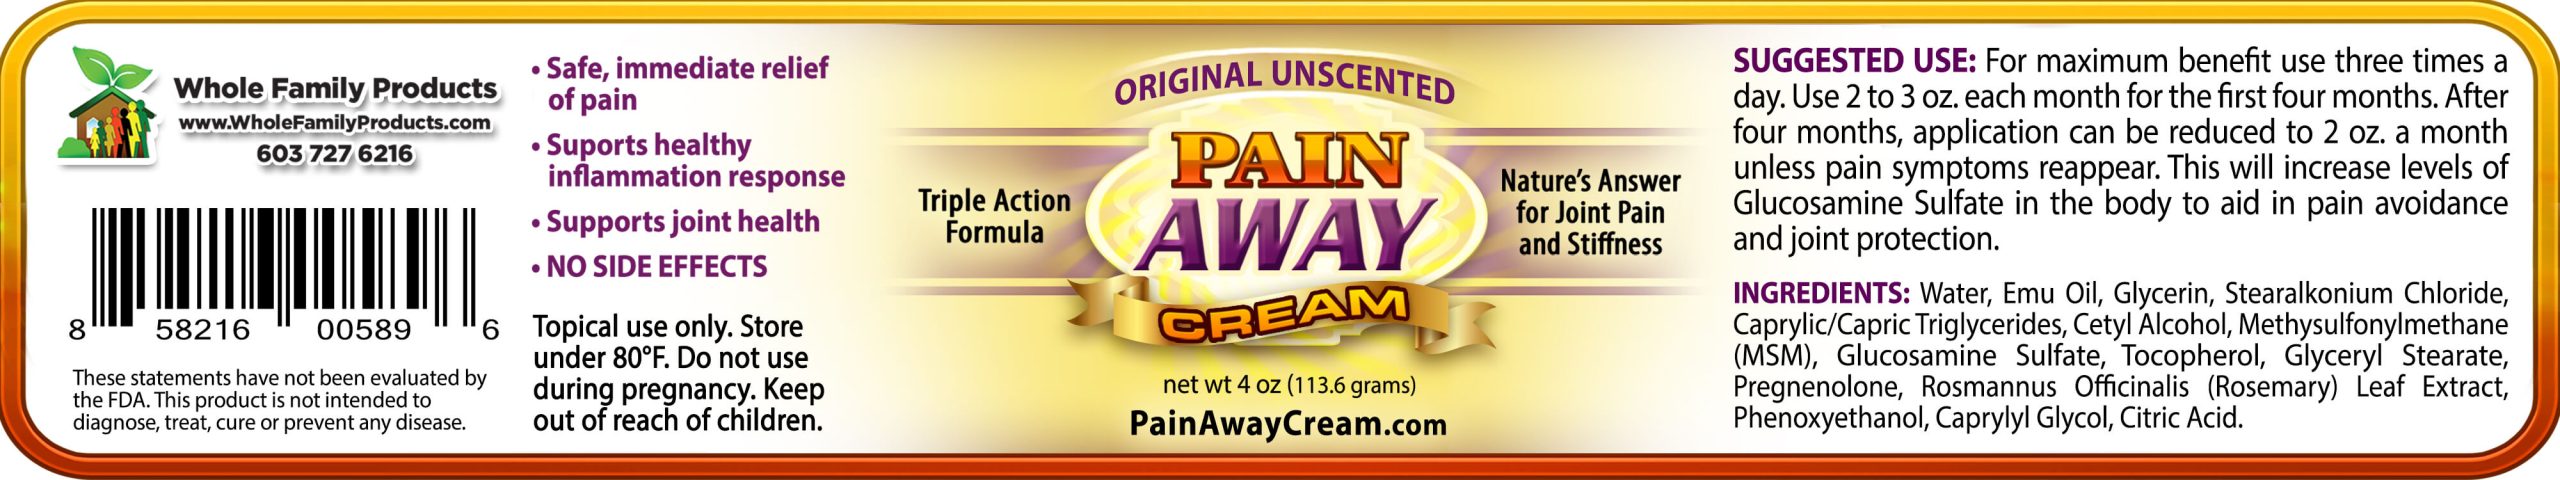 Pain Away Cream Product Label